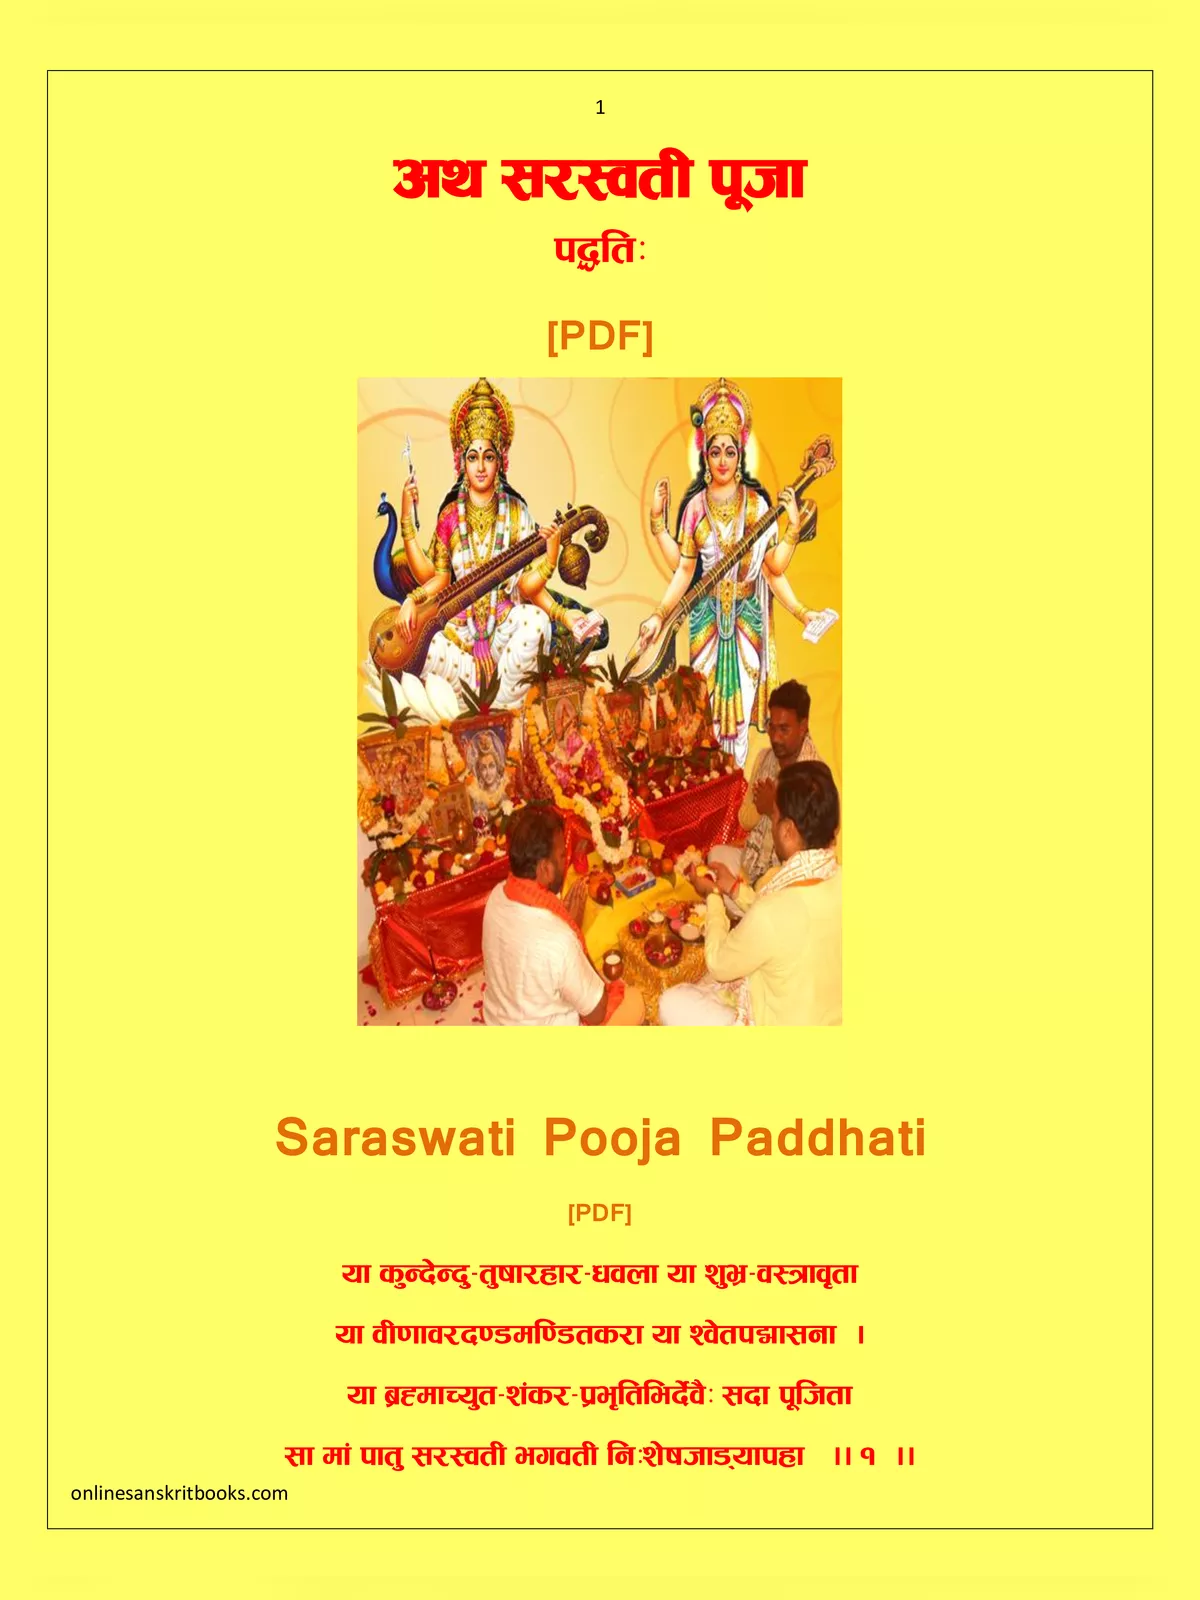 Saraswati Puja Book